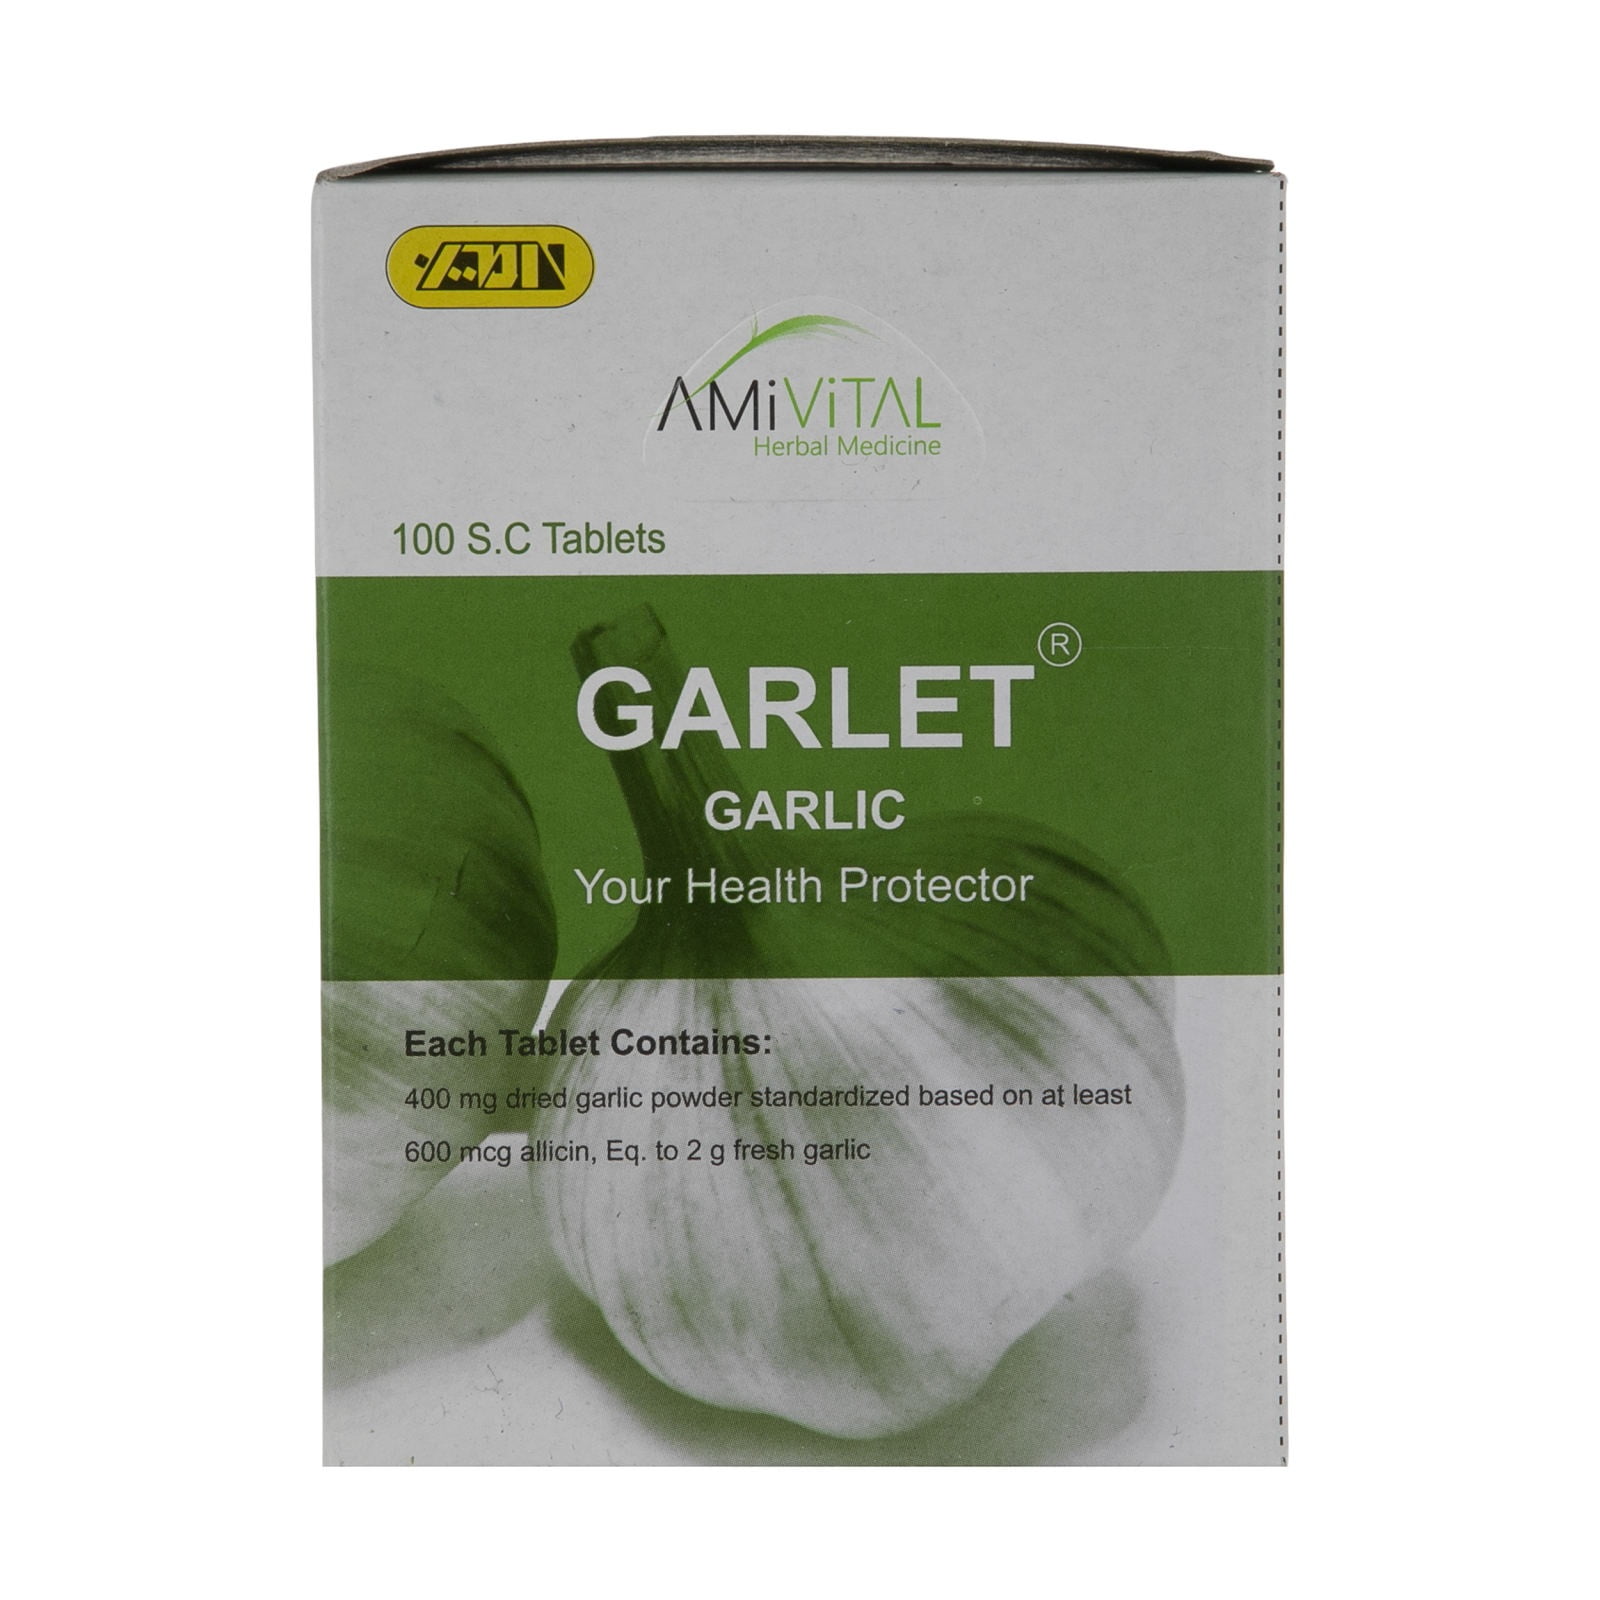 قرص گارلت سیر امی ویتال 100 عدد AmiVital Garlet Garlic 100 Tablets